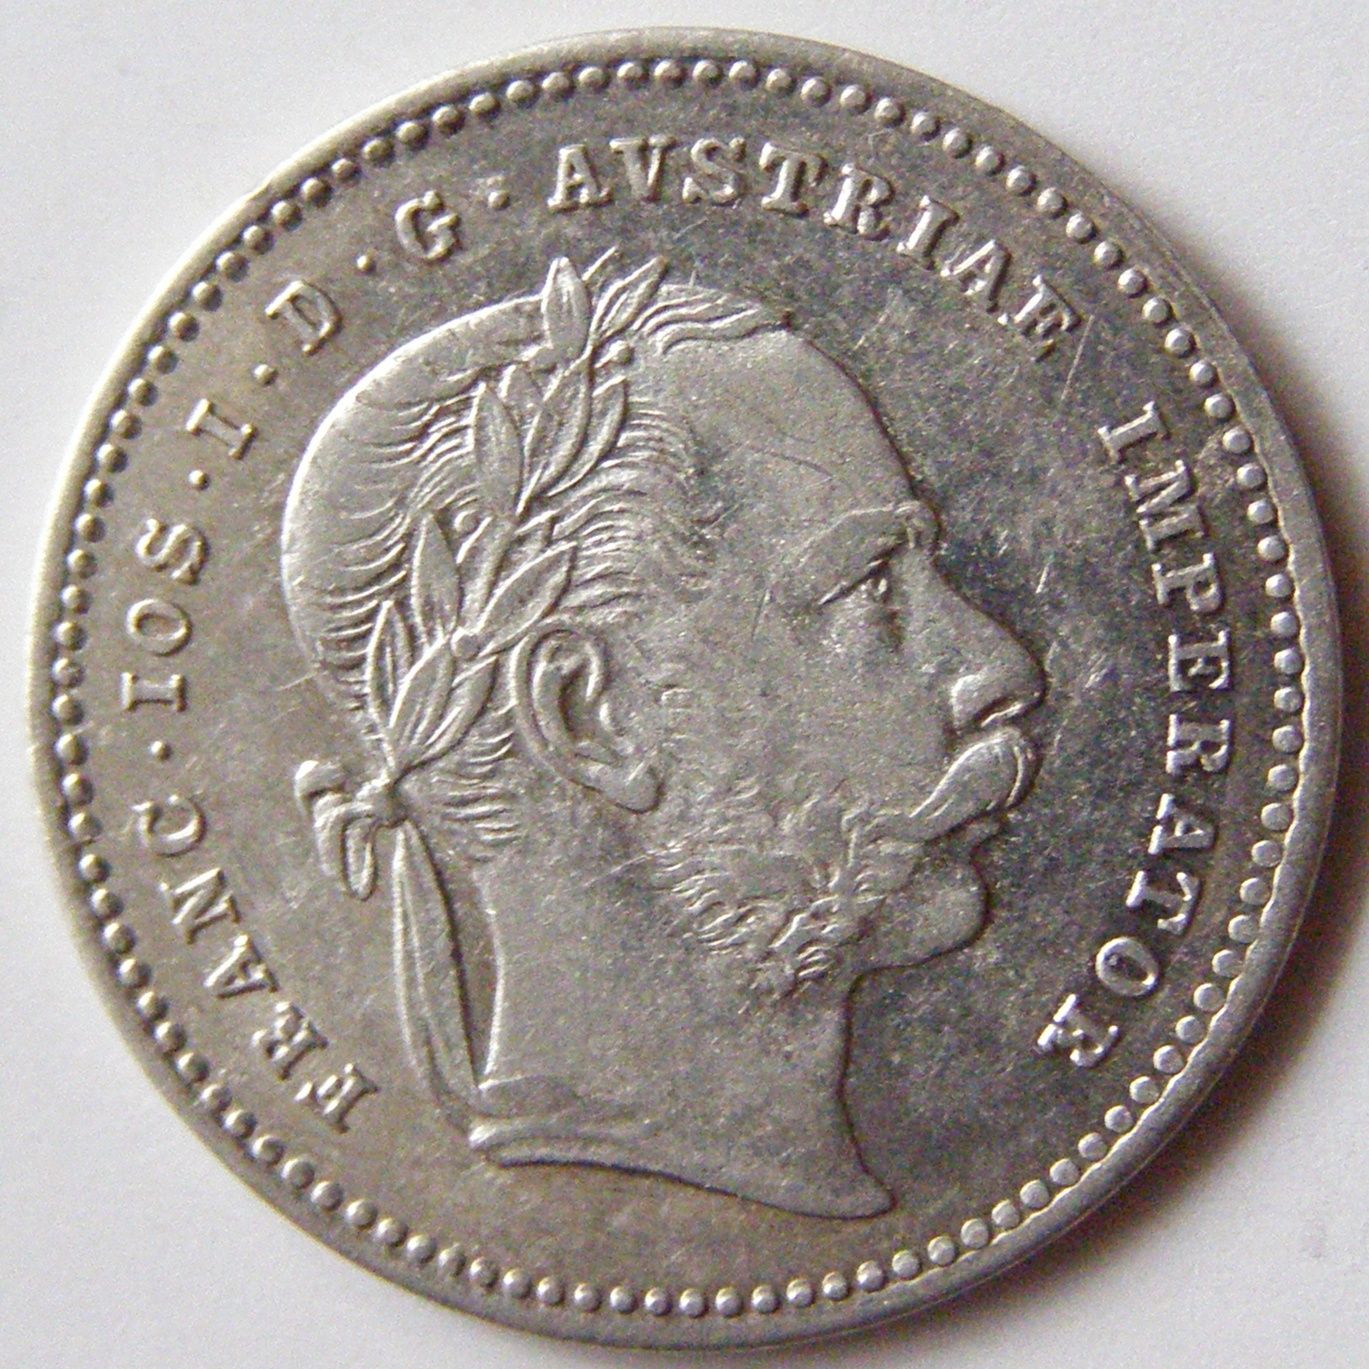 Monety srebrne  Austro-węgry /zabory . 1868 r.